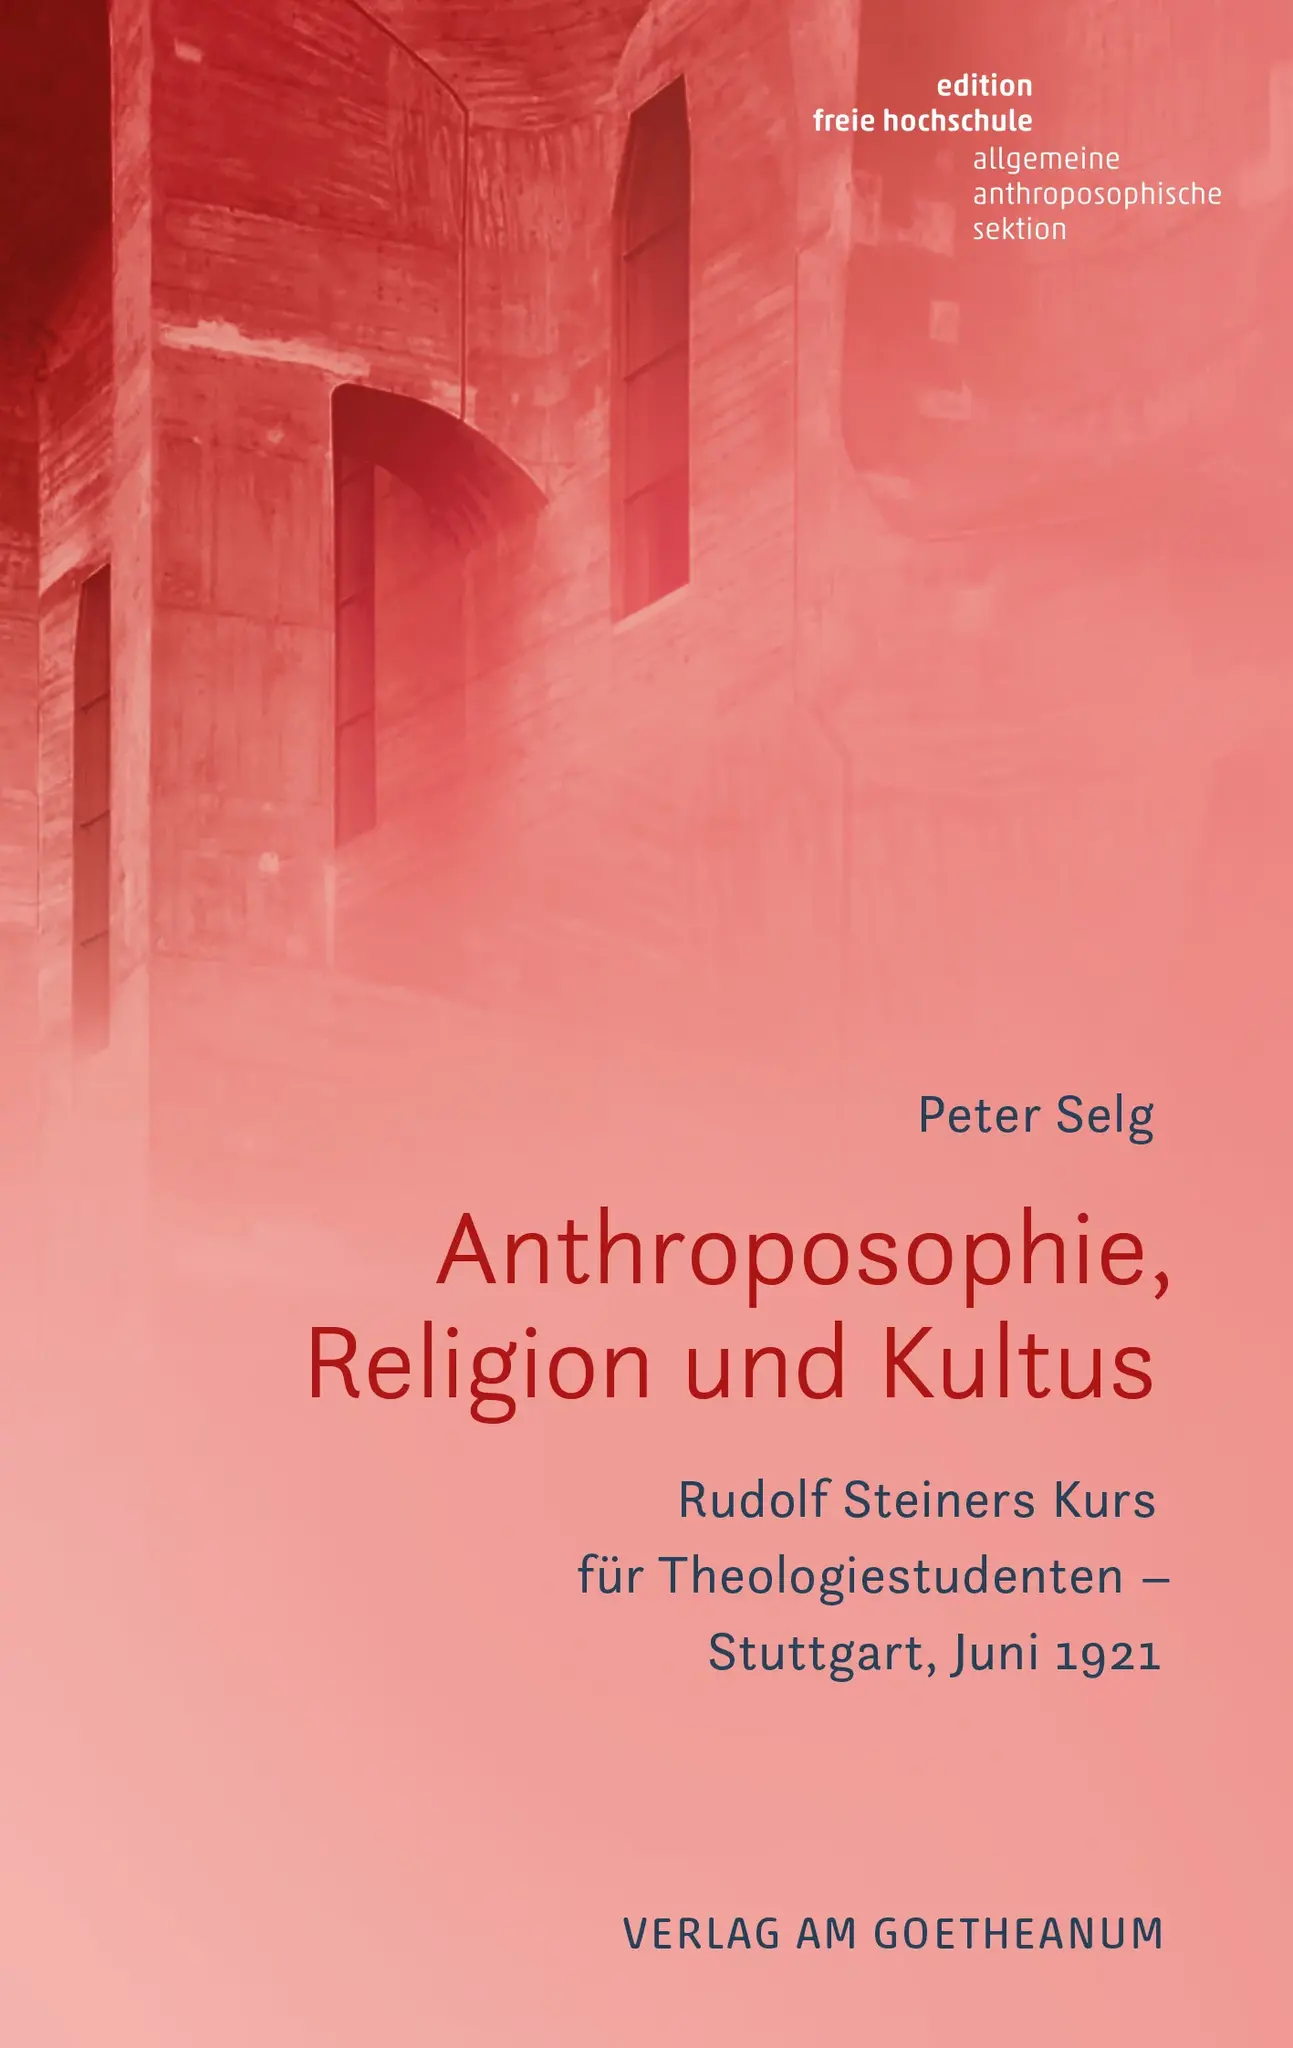 Peter Selg,  Anthroposophie, Religion und Kultus